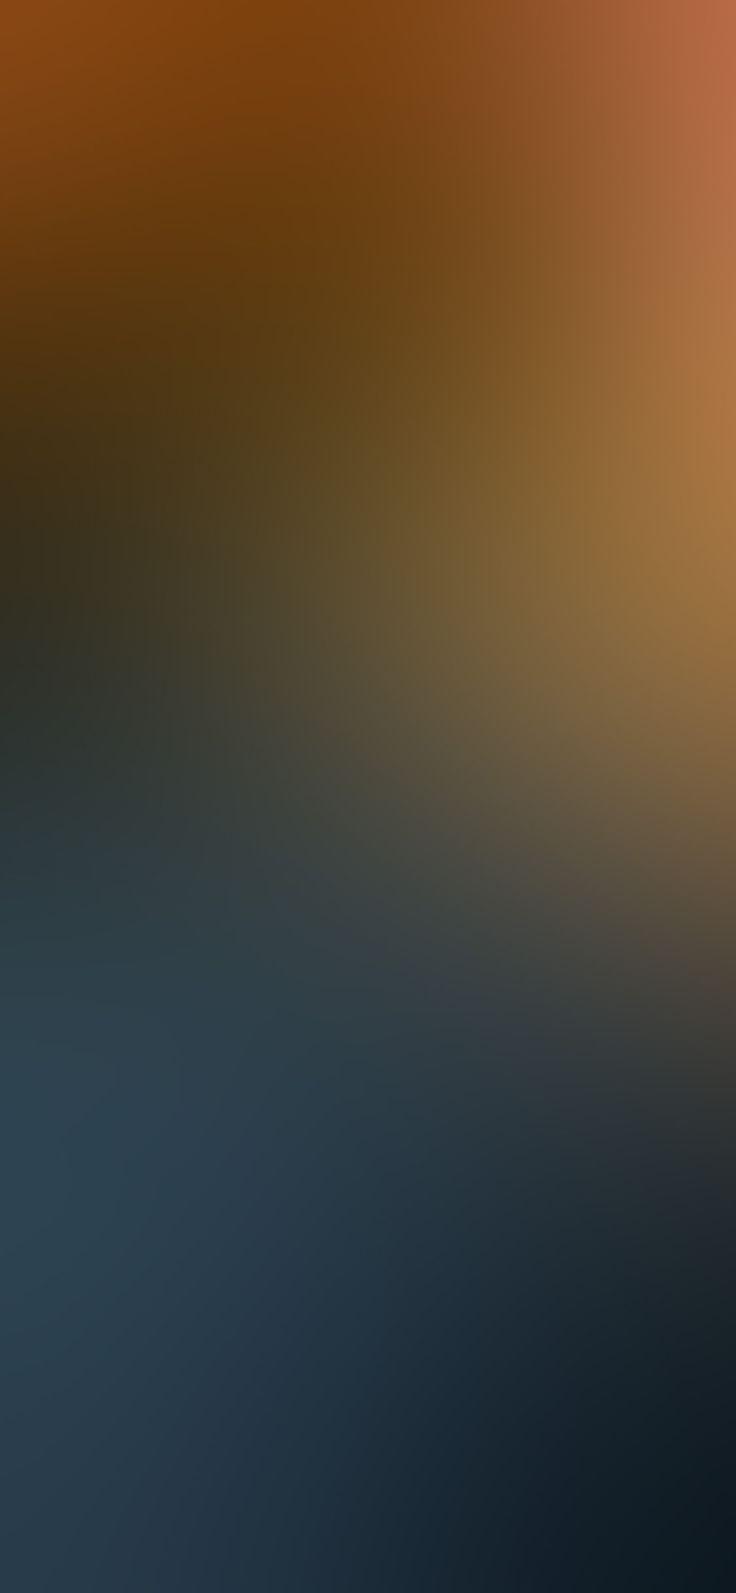 iPhone X wallpaper, orange earth blur gradation